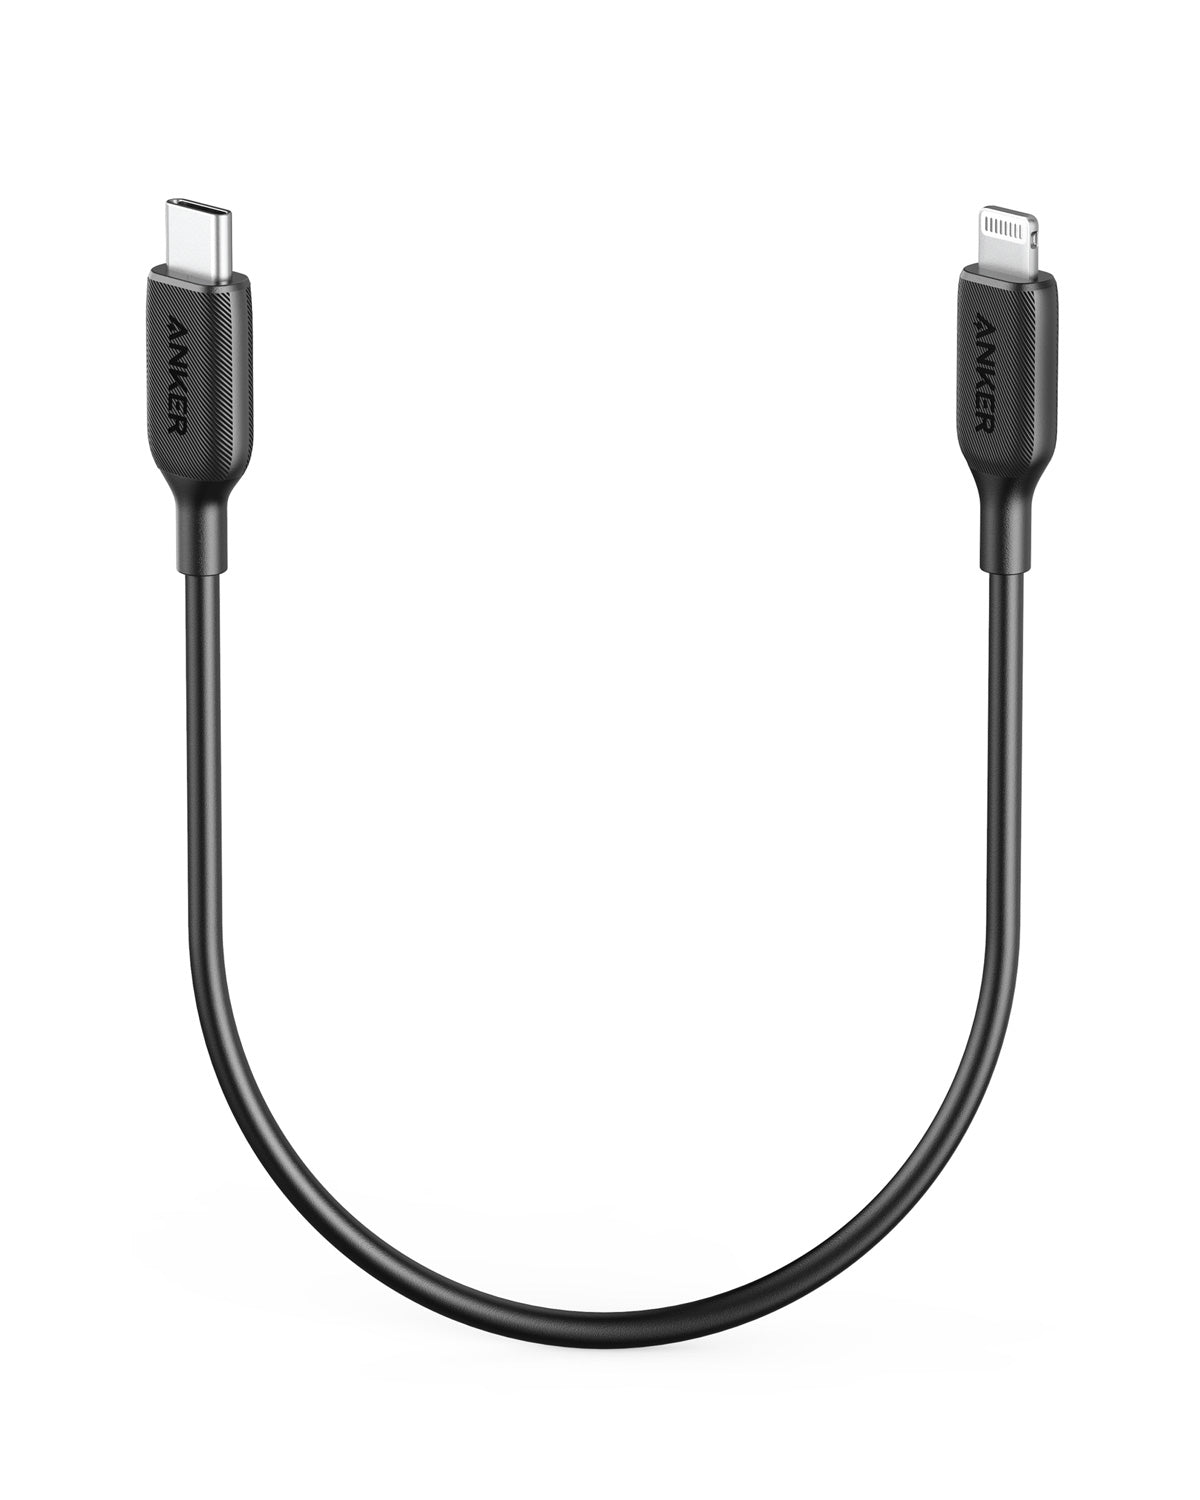 Cable USB-C a Lightning (iPhone) 1mt modelo US387 Certifi